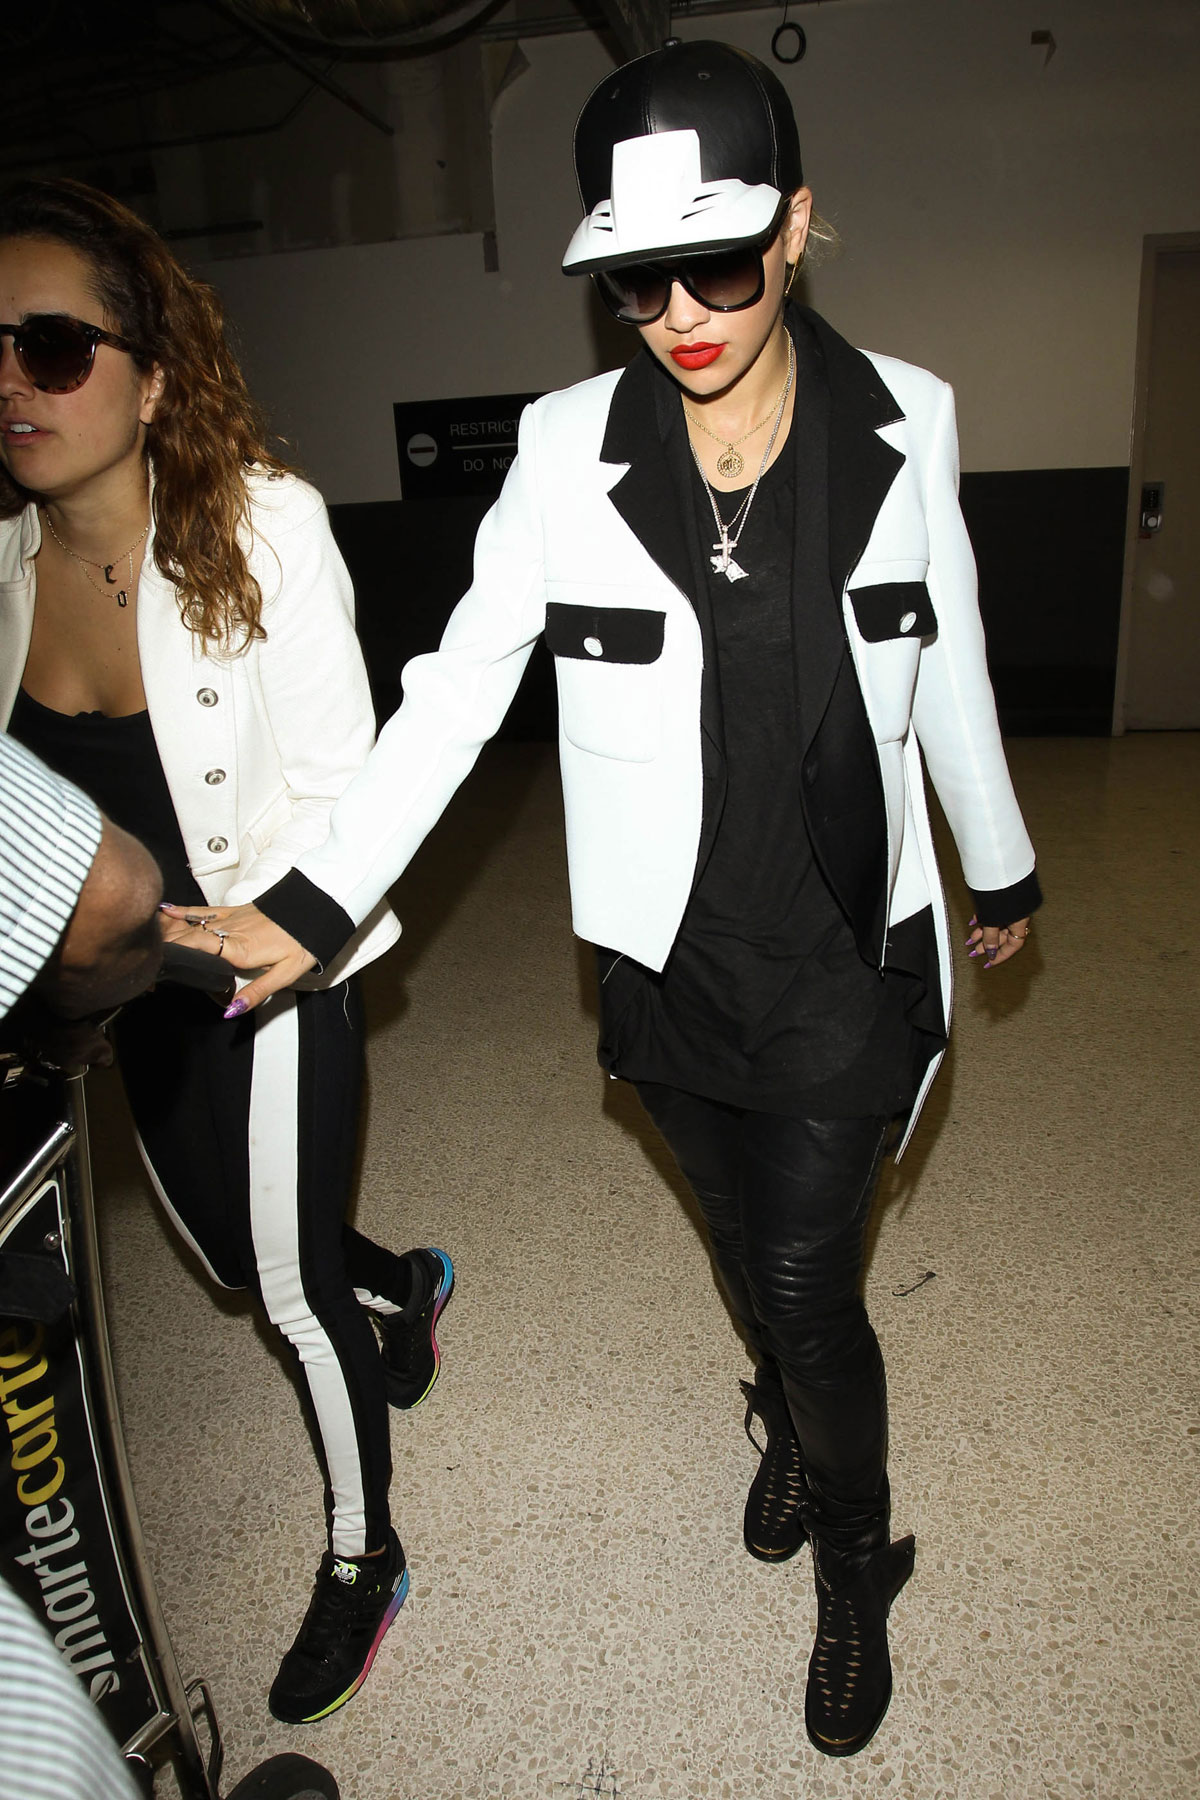 Rita Ora arriving at LAX airport